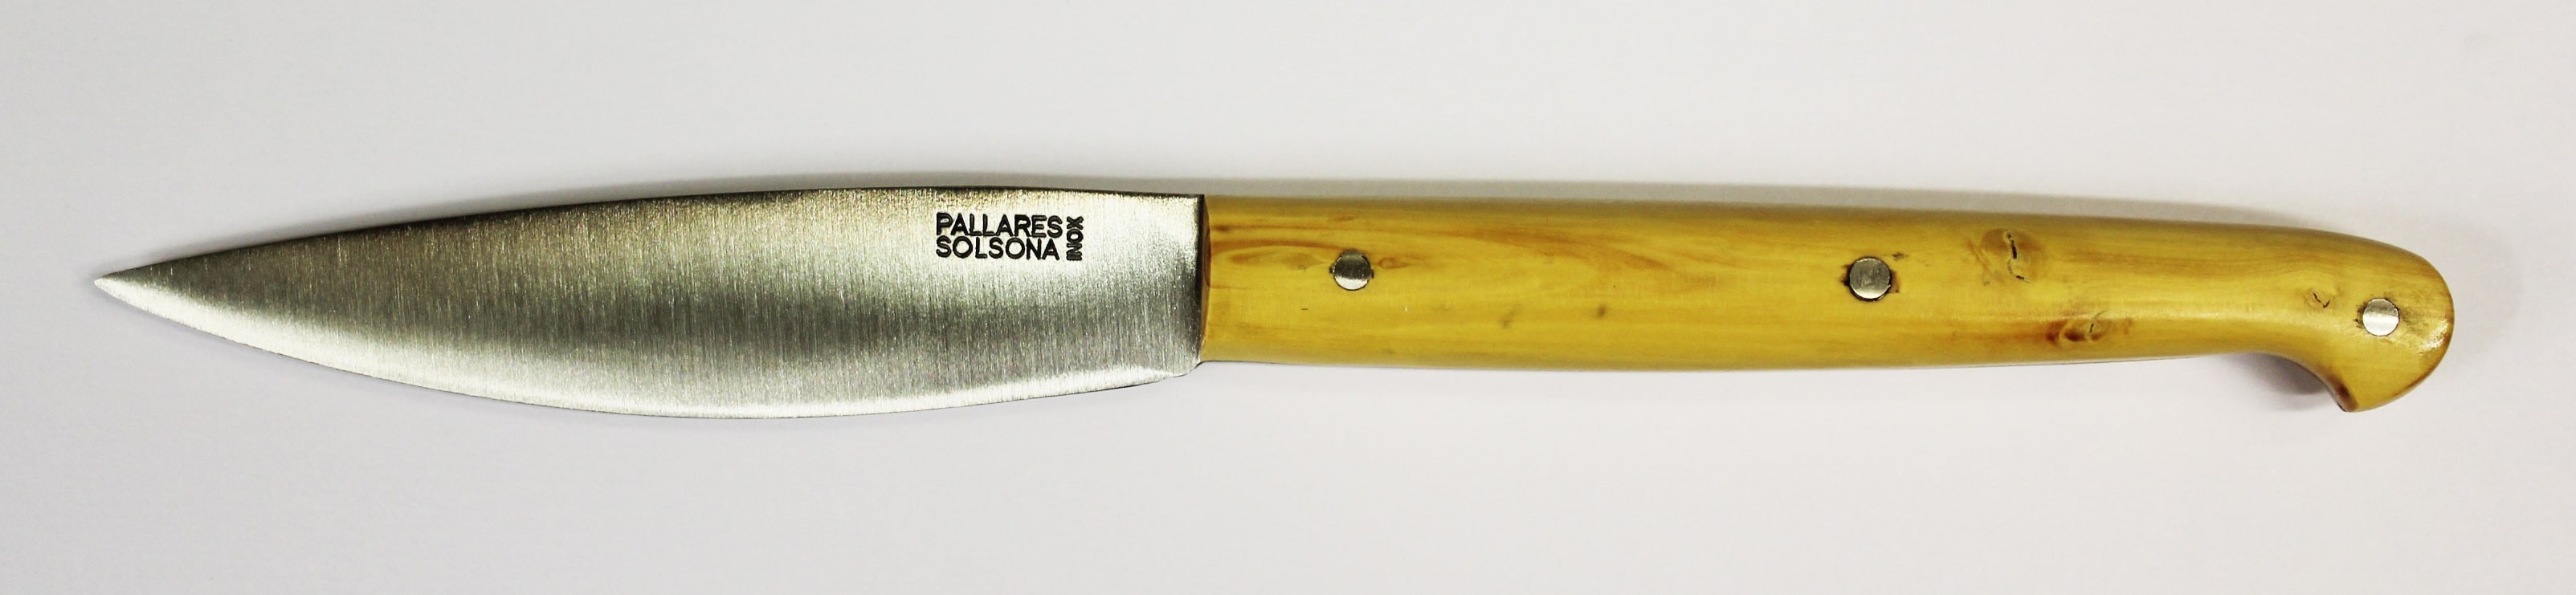 Cuchillo mesa inox Pallarès Solsona madera boj 10 cm - Ganivetería Roca